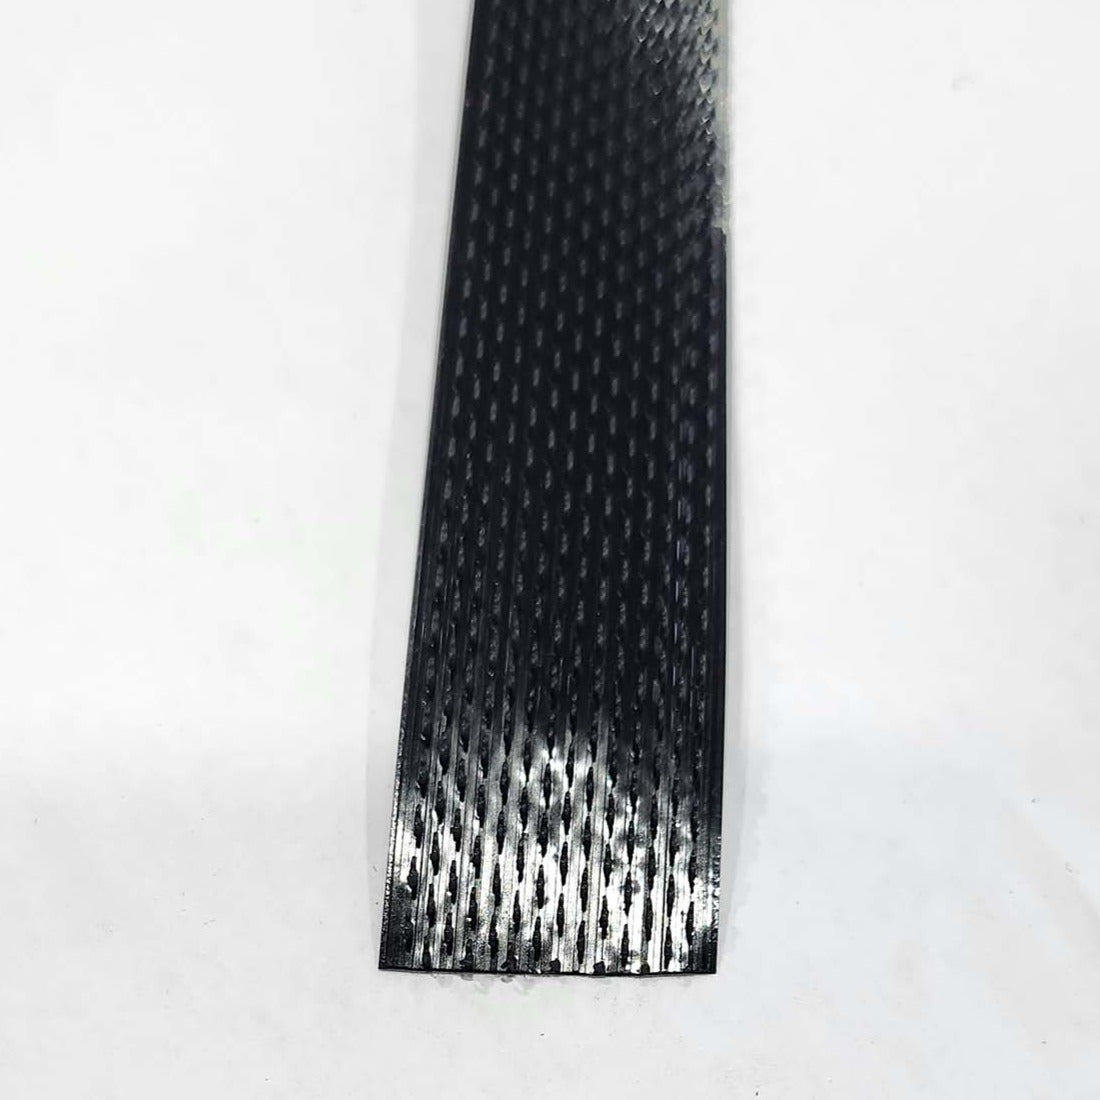 Velcro MVA8 Hook Black per metre